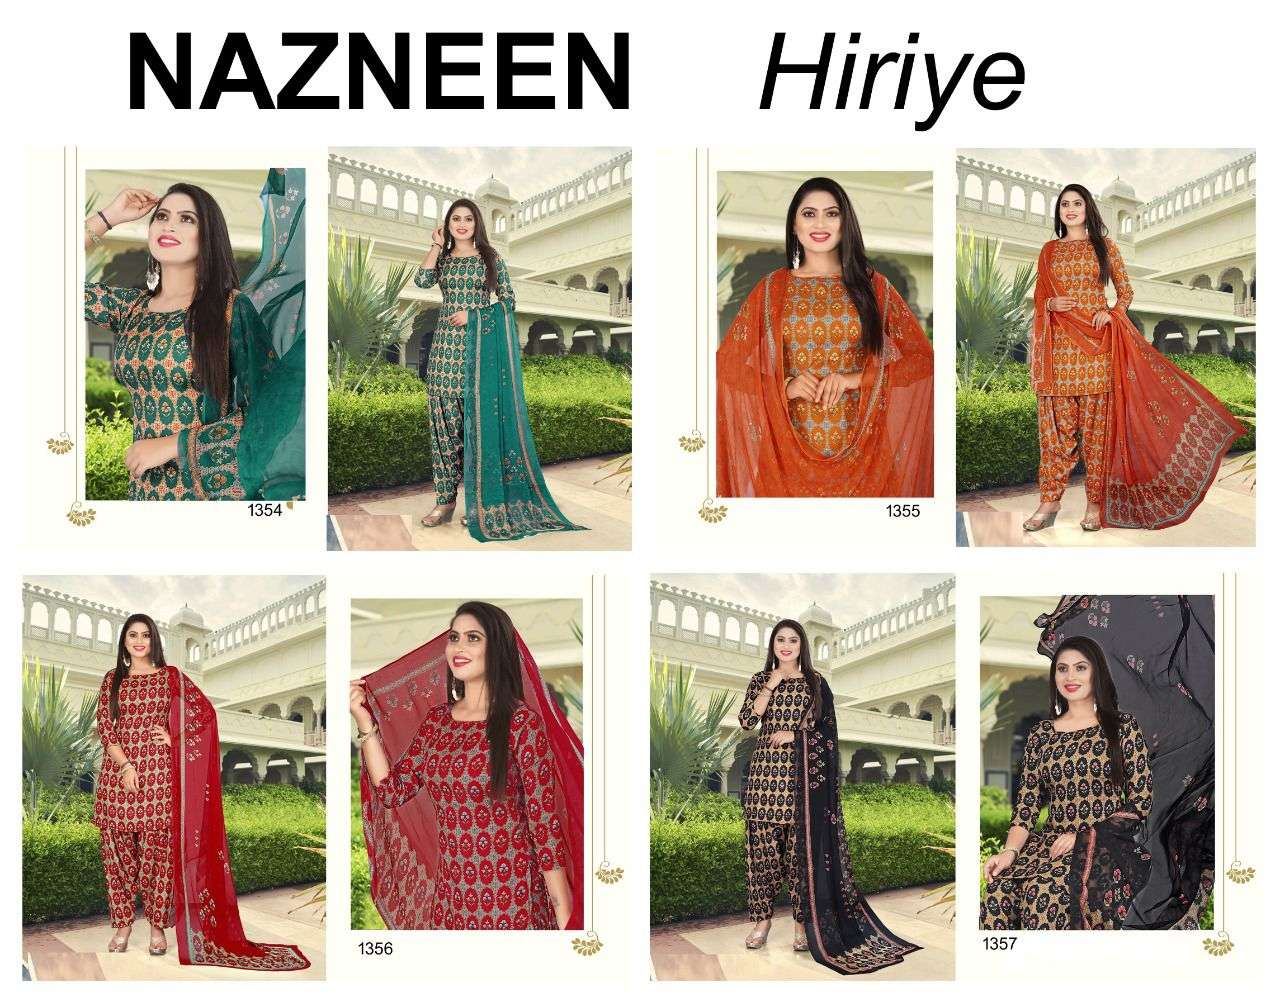 nazneen hiriye 1354-1357 series stylish designer pakistani salwar kameez in india 